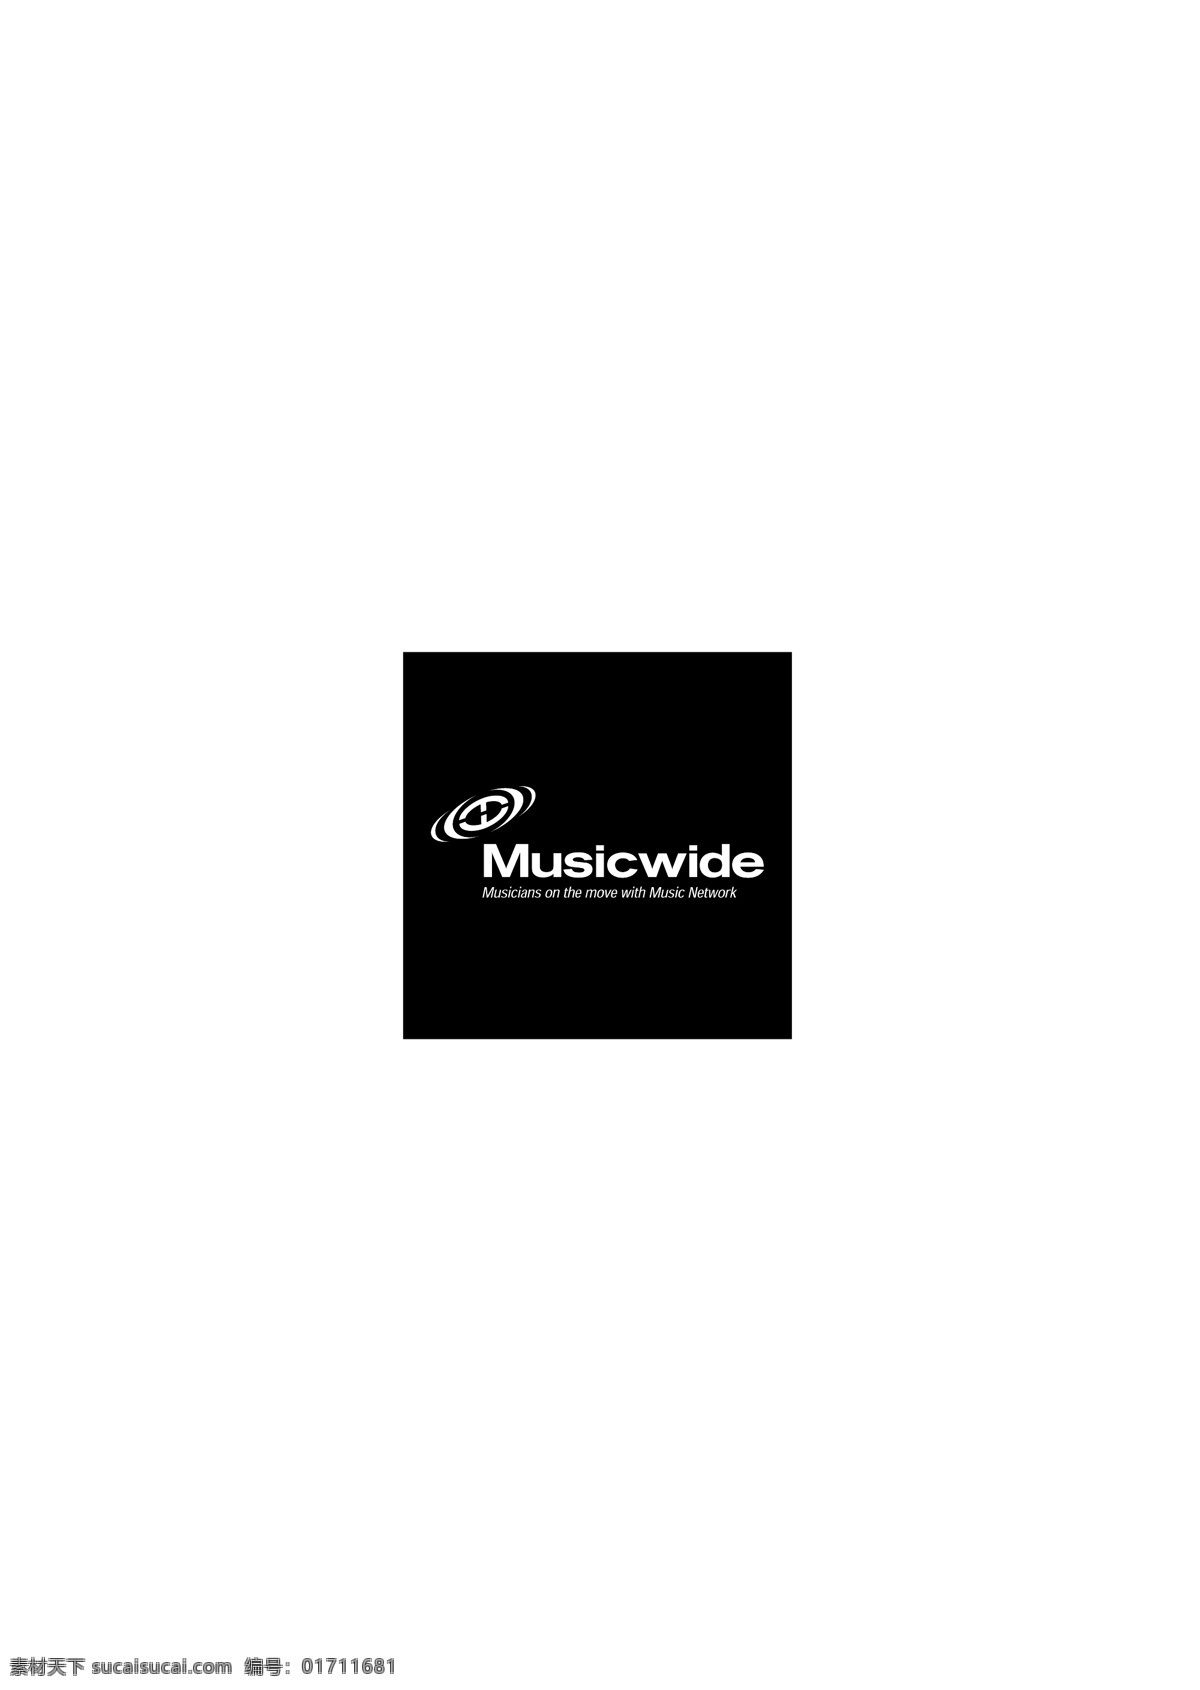 musicwide logo 设计欣赏 musicwidecd 唱片 标志 标志设计 欣赏 矢量下载 网页矢量 商业矢量 logo大全 红色